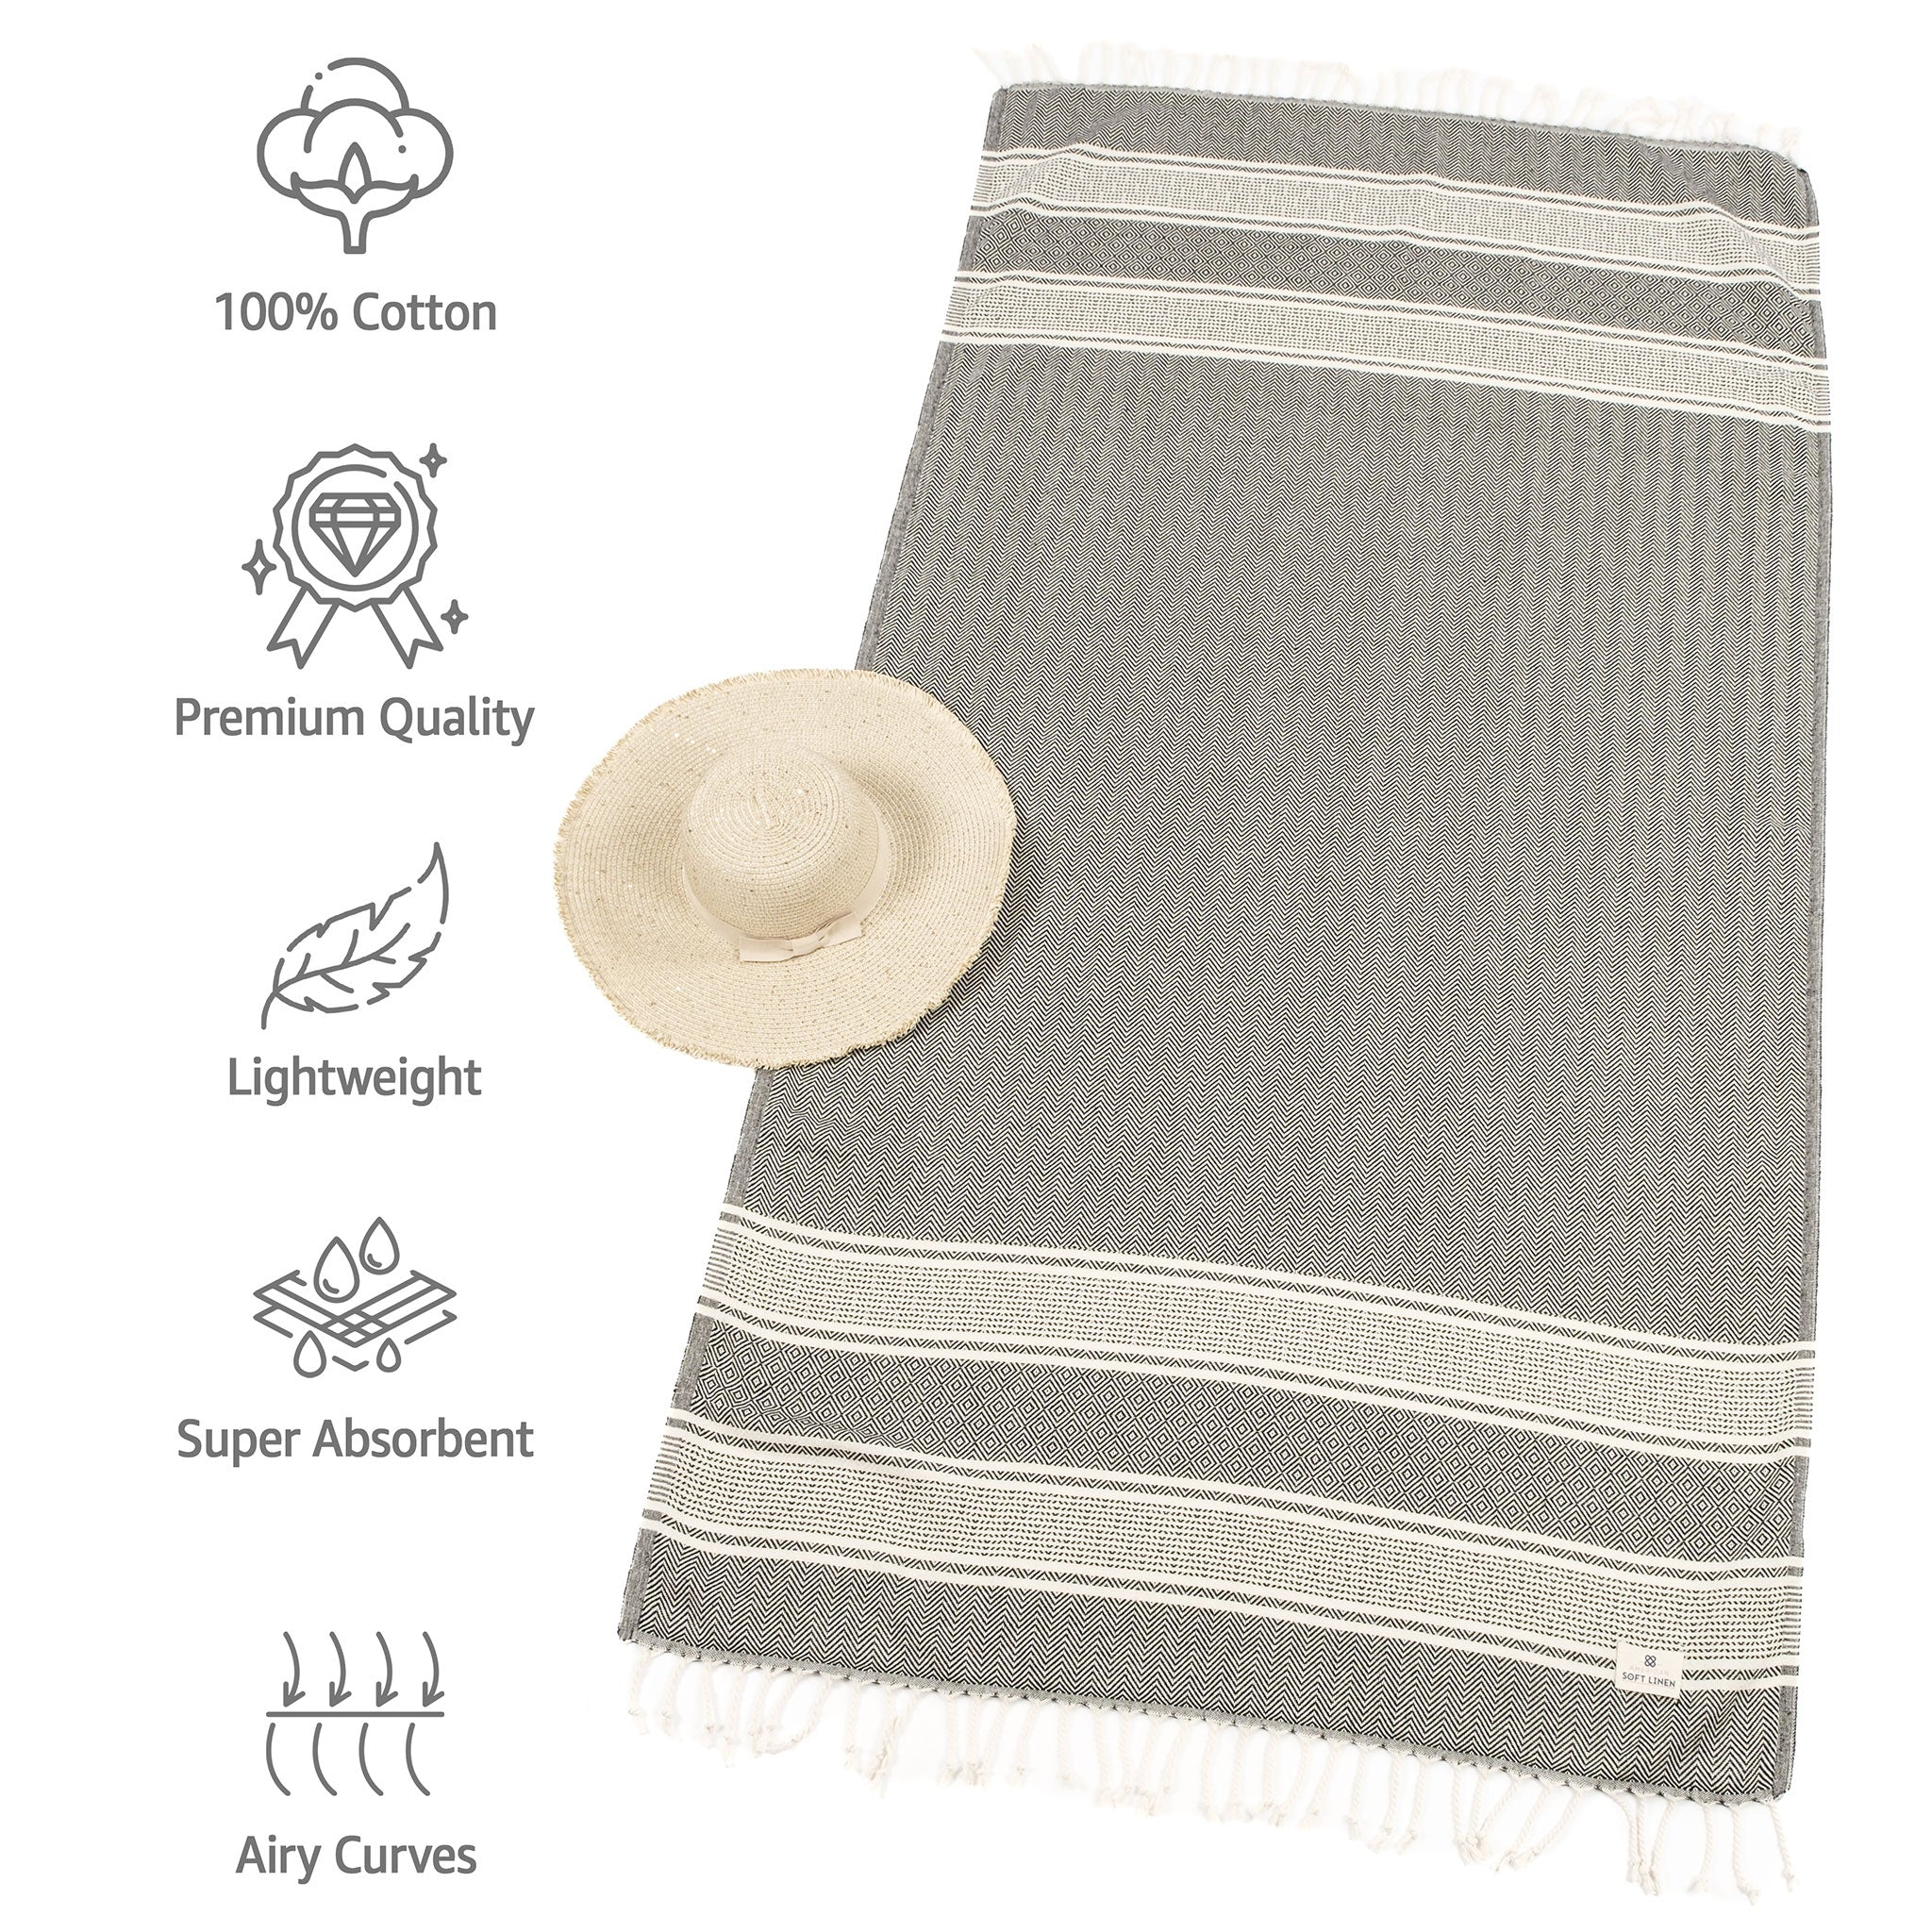 American Soft Linen - 100% Cotton Turkish Peshtemal Towels 40x70 Inches - Black-Striped - 3